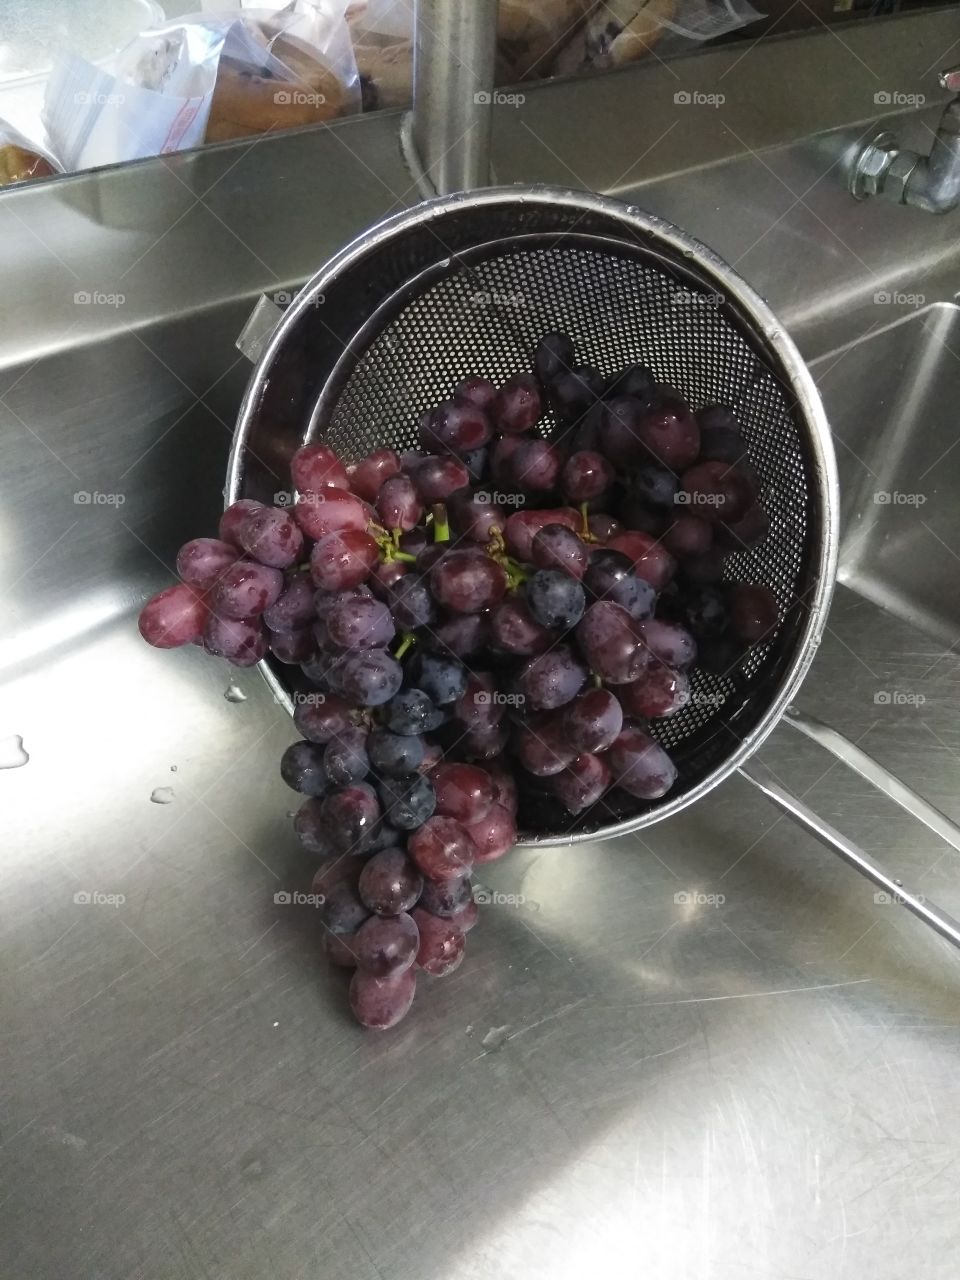 peak me some grapes